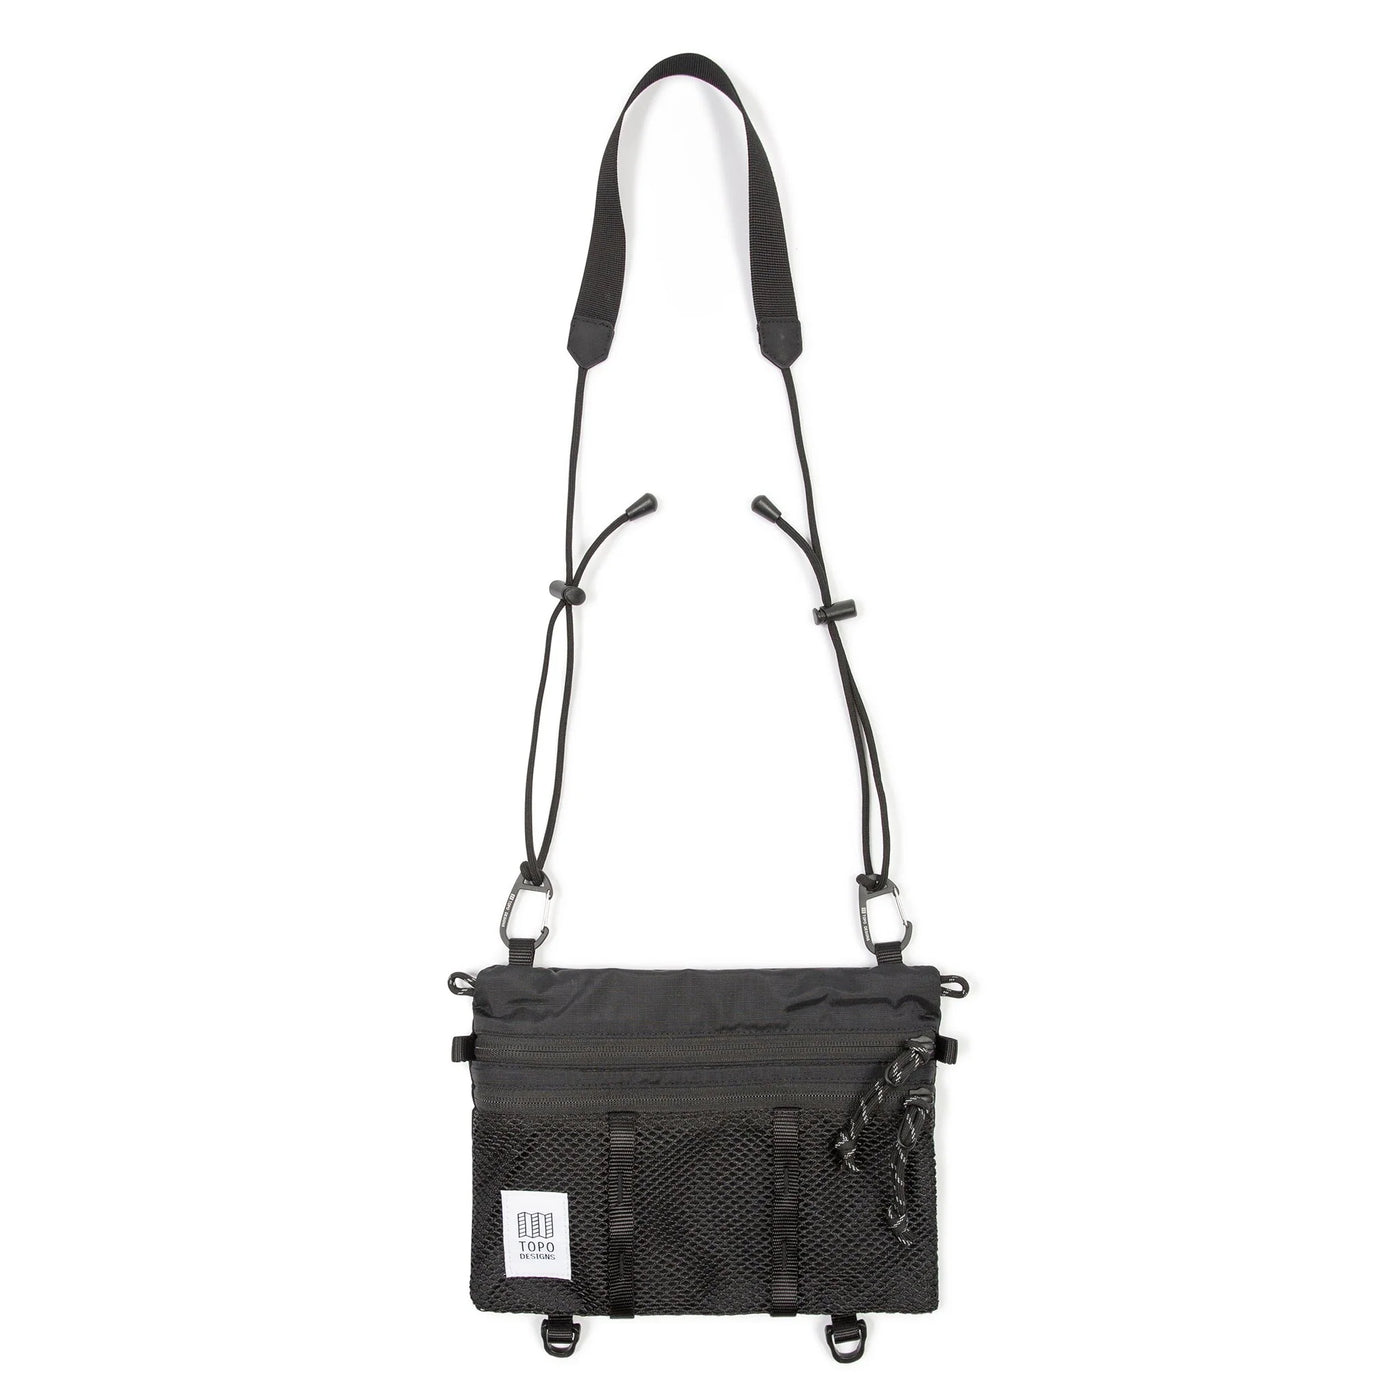 Topo Designs Mountain Accessory Shoulder Bag Black